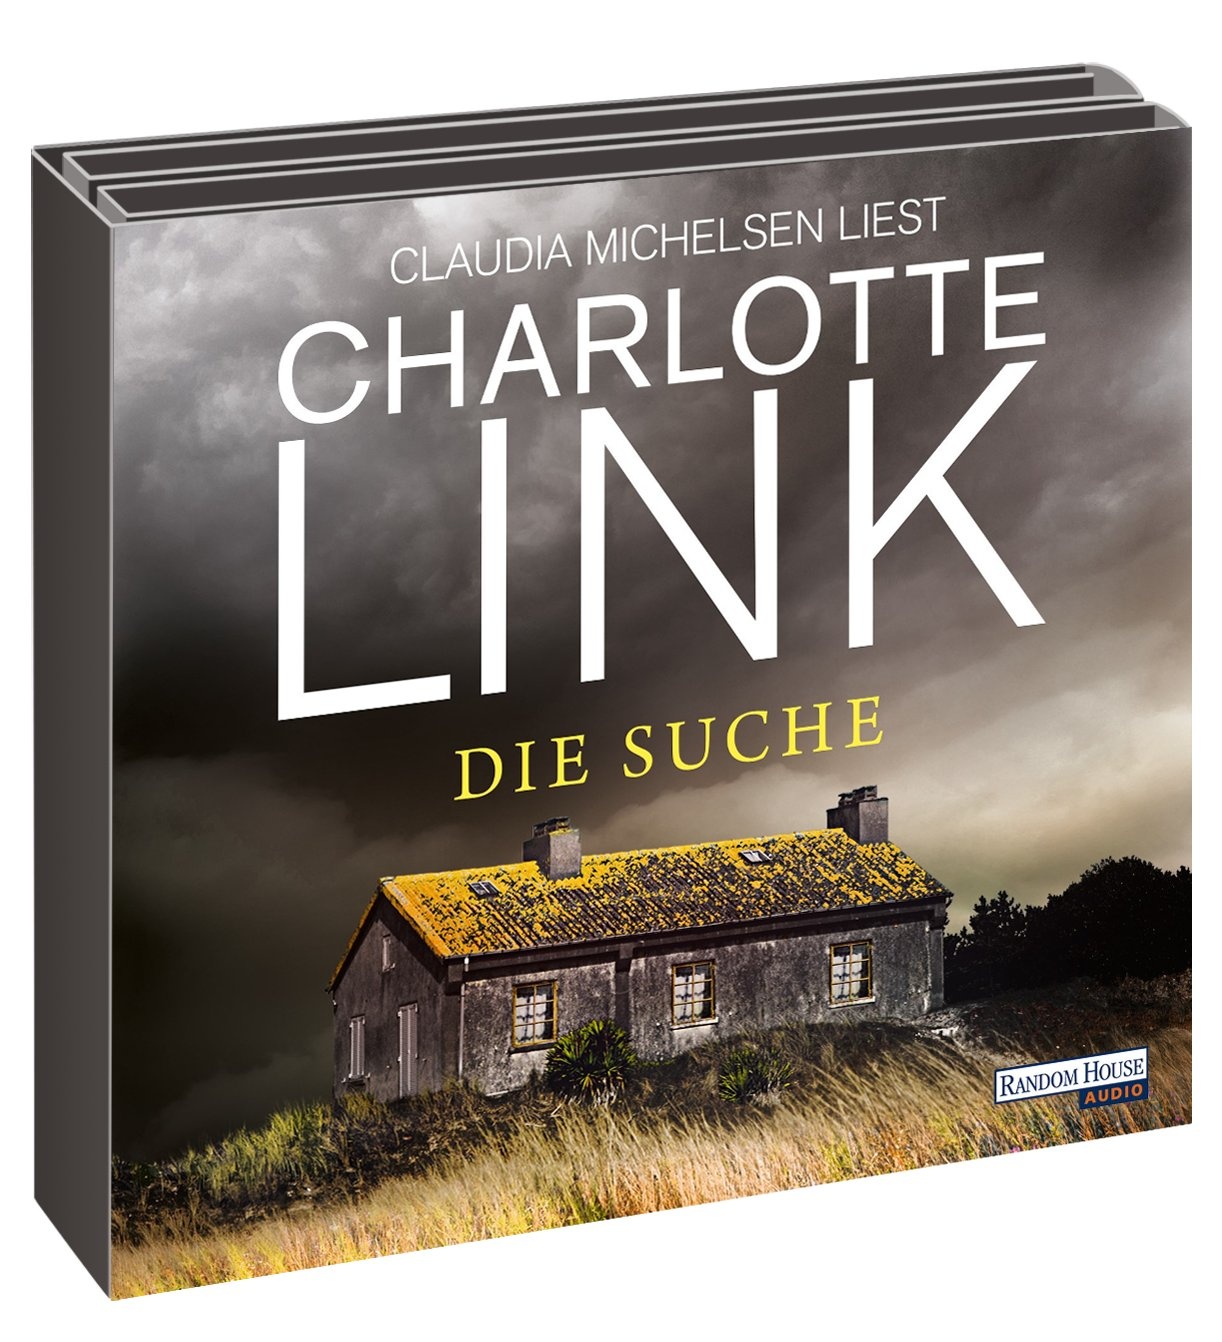 Polizistin Kate Linville - 2 - Die Suche - Charlotte Link (Hörbuch)